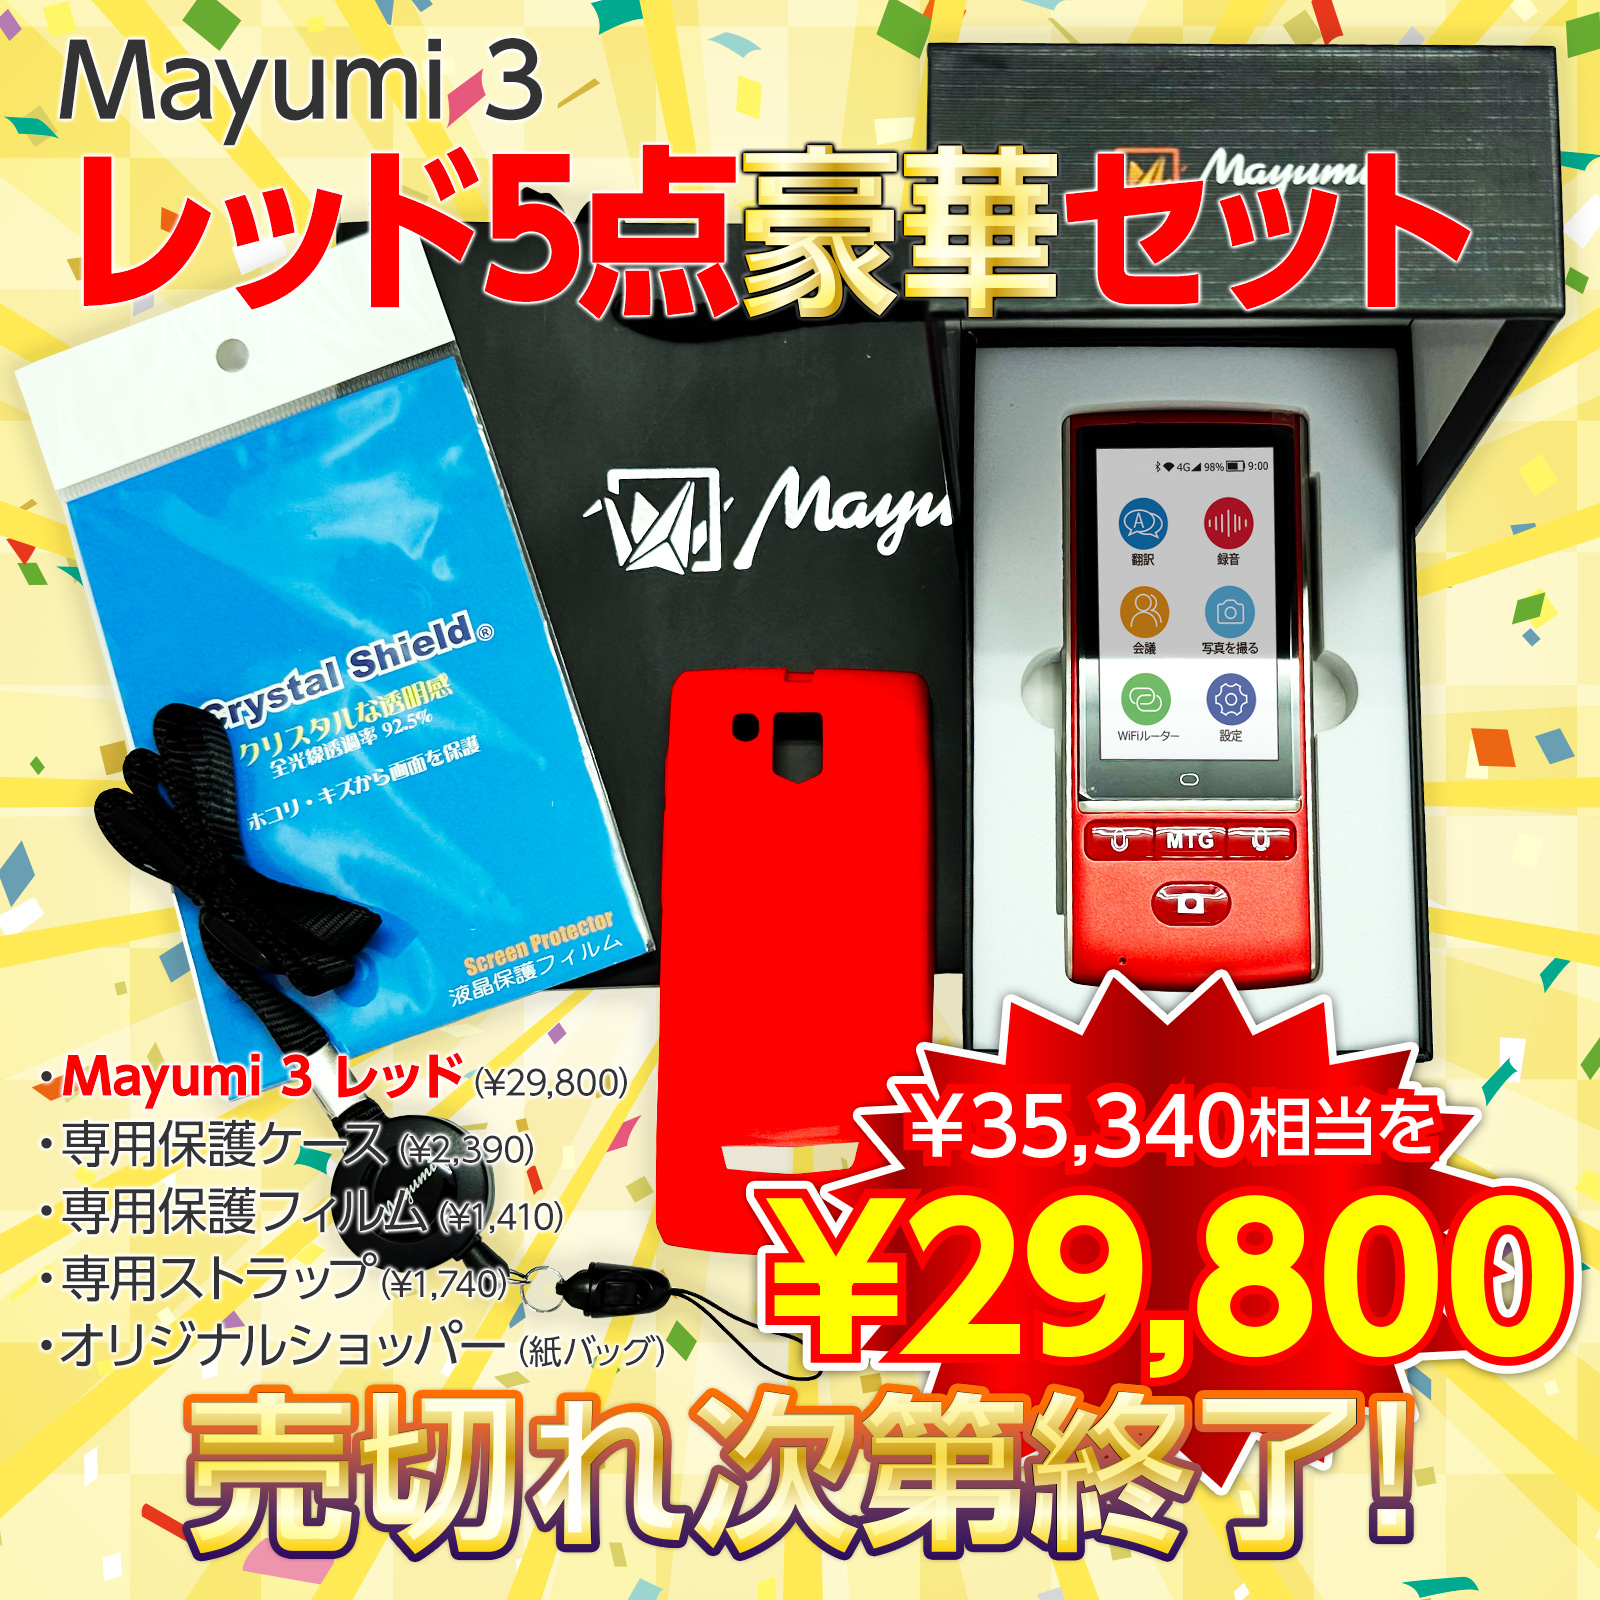 【Mayumi公式】音声翻訳機 Mayumi3 200ヶ国以上85言語音声翻訳対応 SIM付 WiFiルーター機能 最先端AI双方向 オフライン翻訳  OCR・カメラ翻訳 2G.3G.4G/WiFi通信 通訳機 語学学習 海外旅行 | Mayumi 楽天市場店